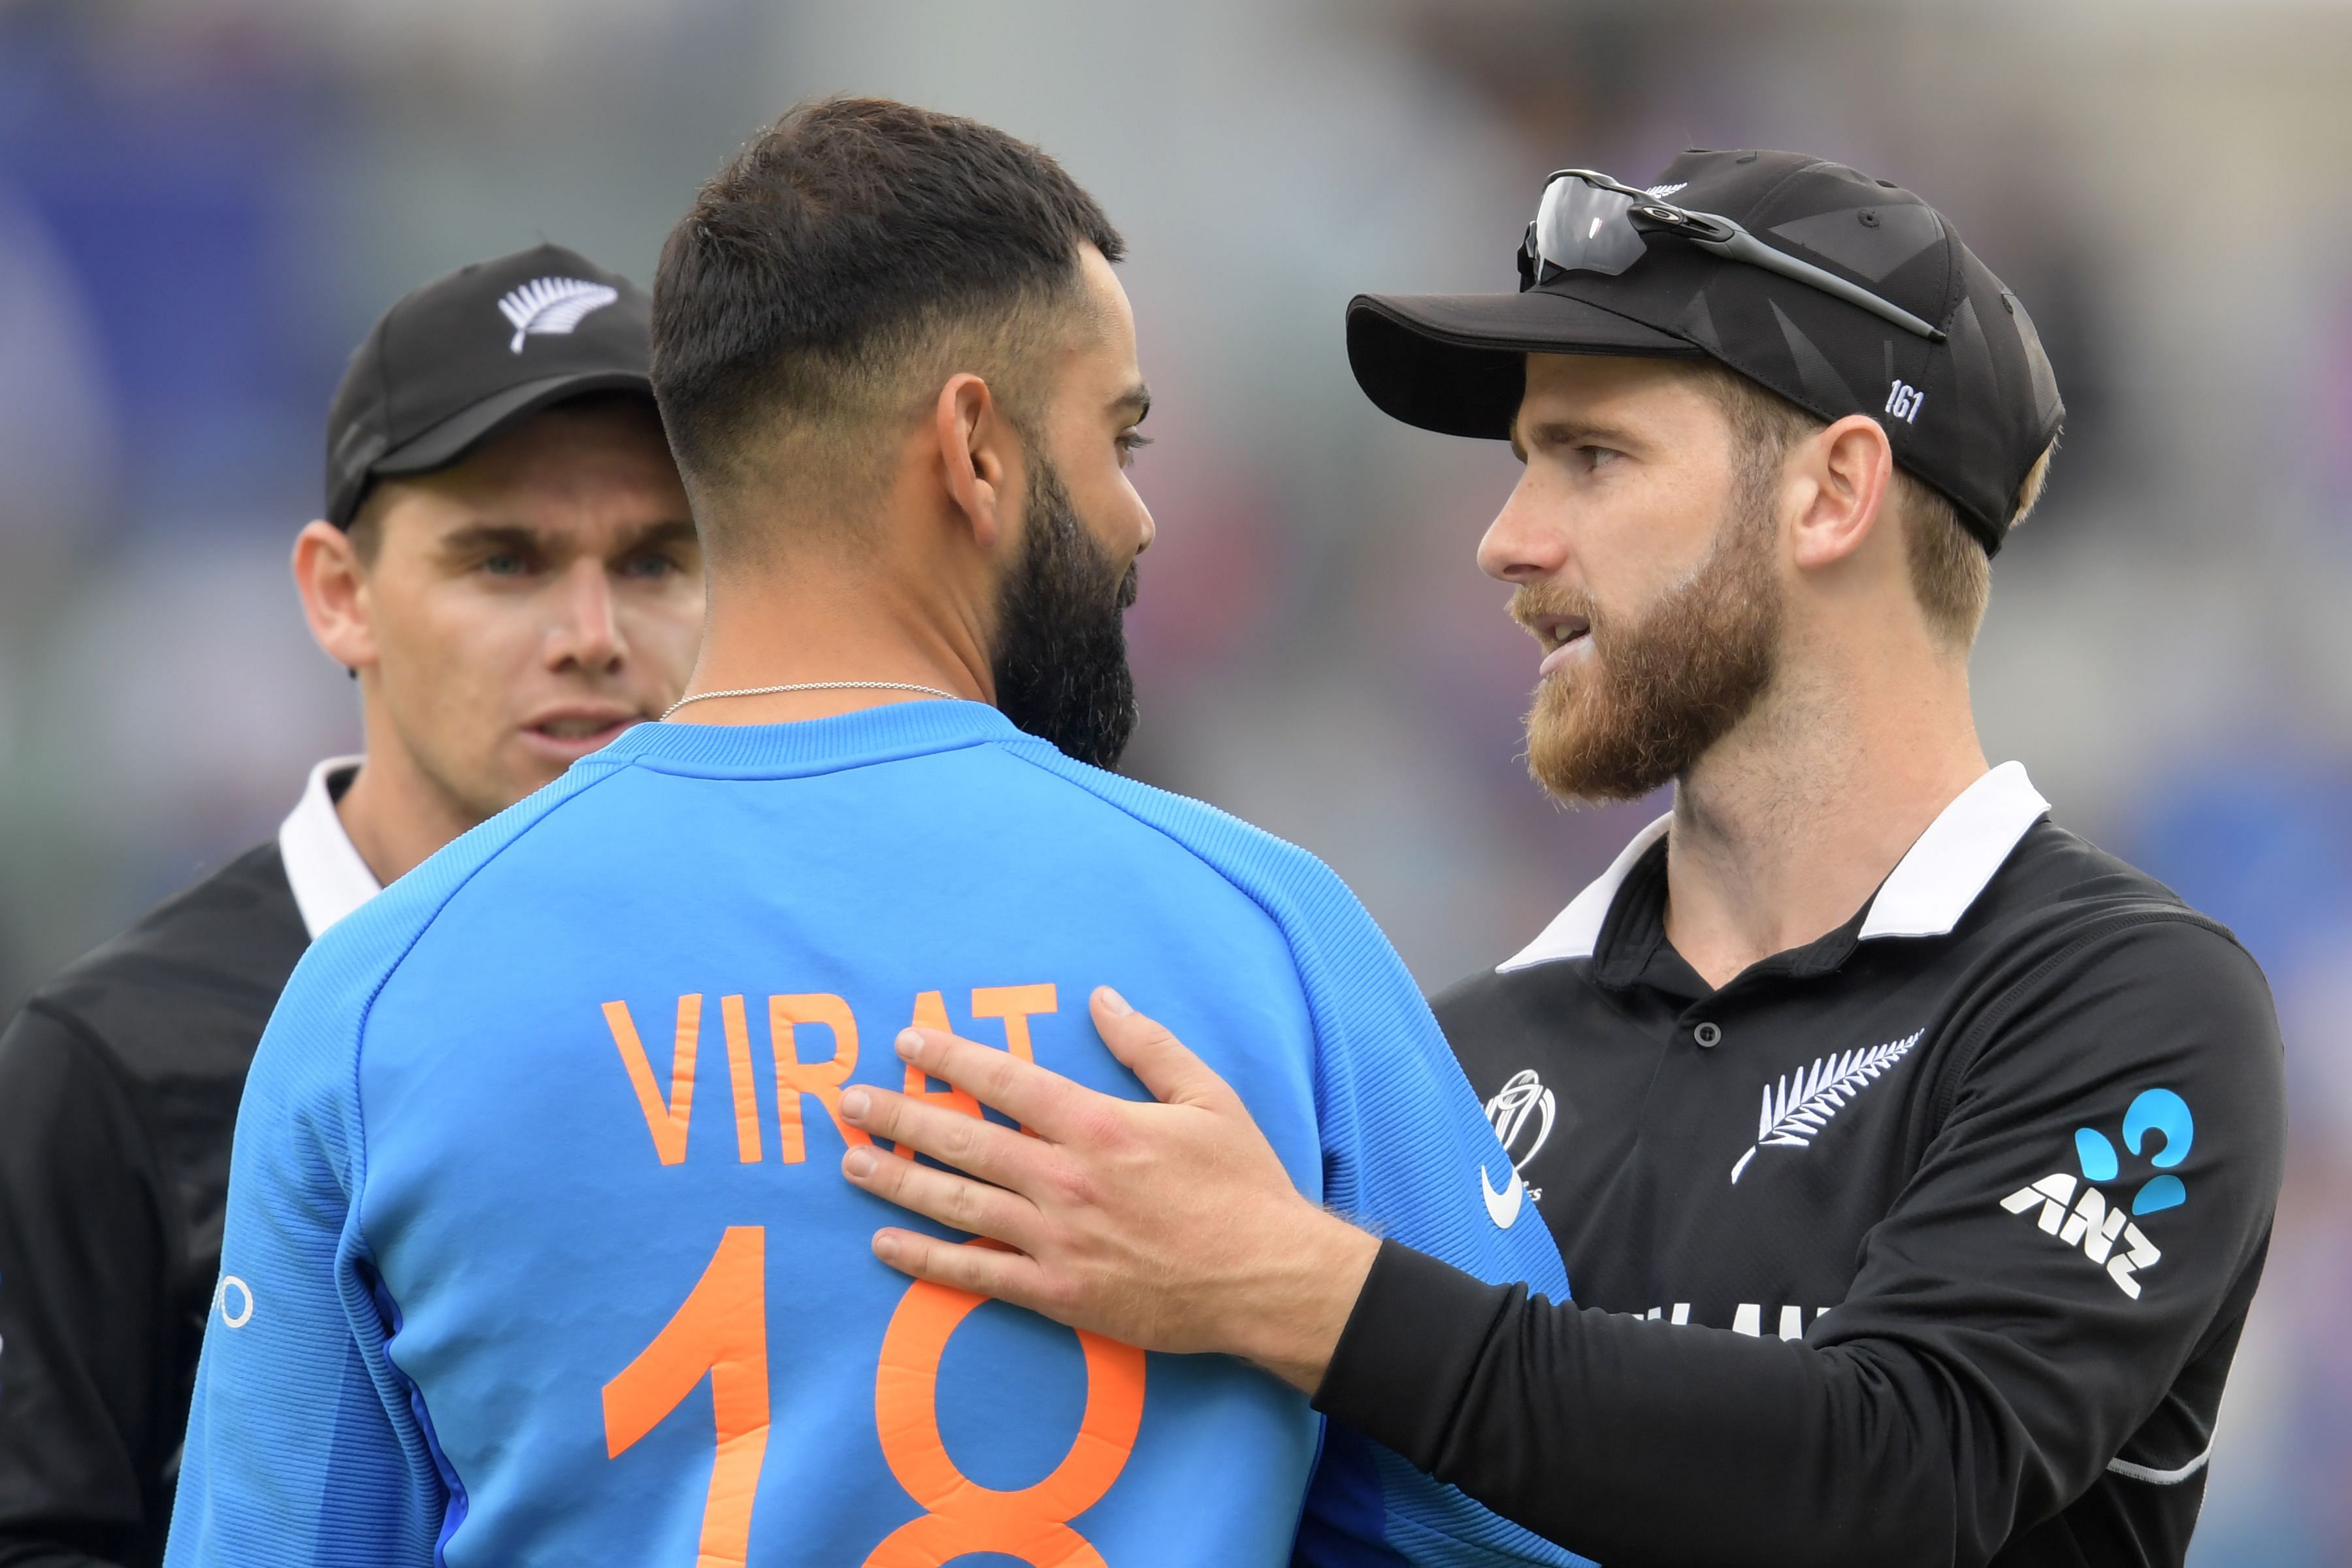 New Zealand's captain Kane Williamson (R) greets India's captain Virat Kohli. (AFP Photo)